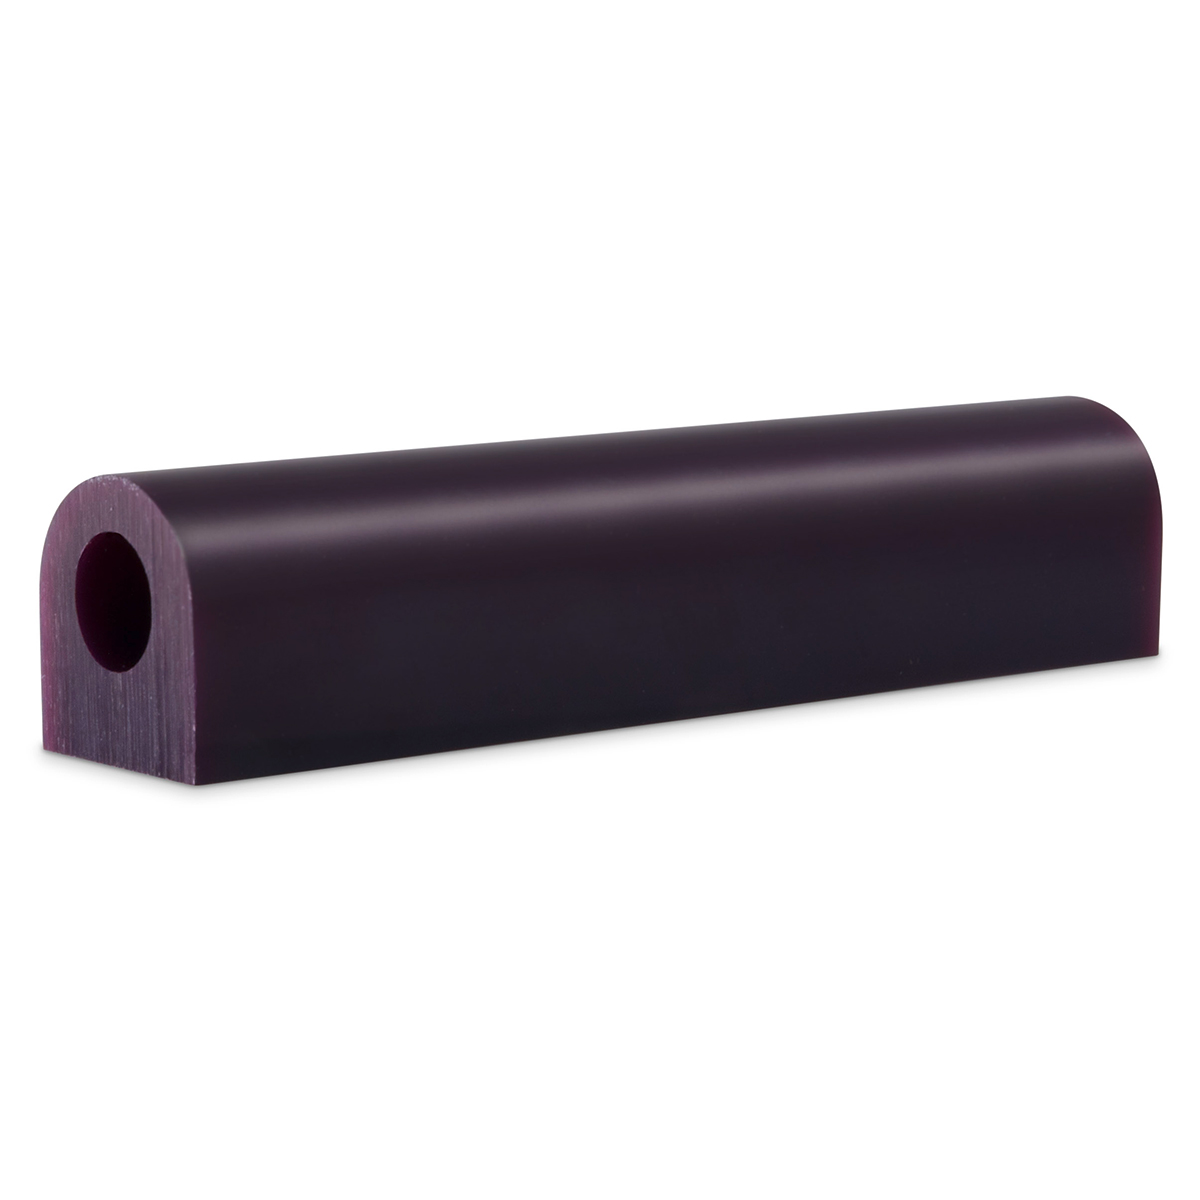 Carving wax tube, 27 x 27 mm, one flat side, purple, medium